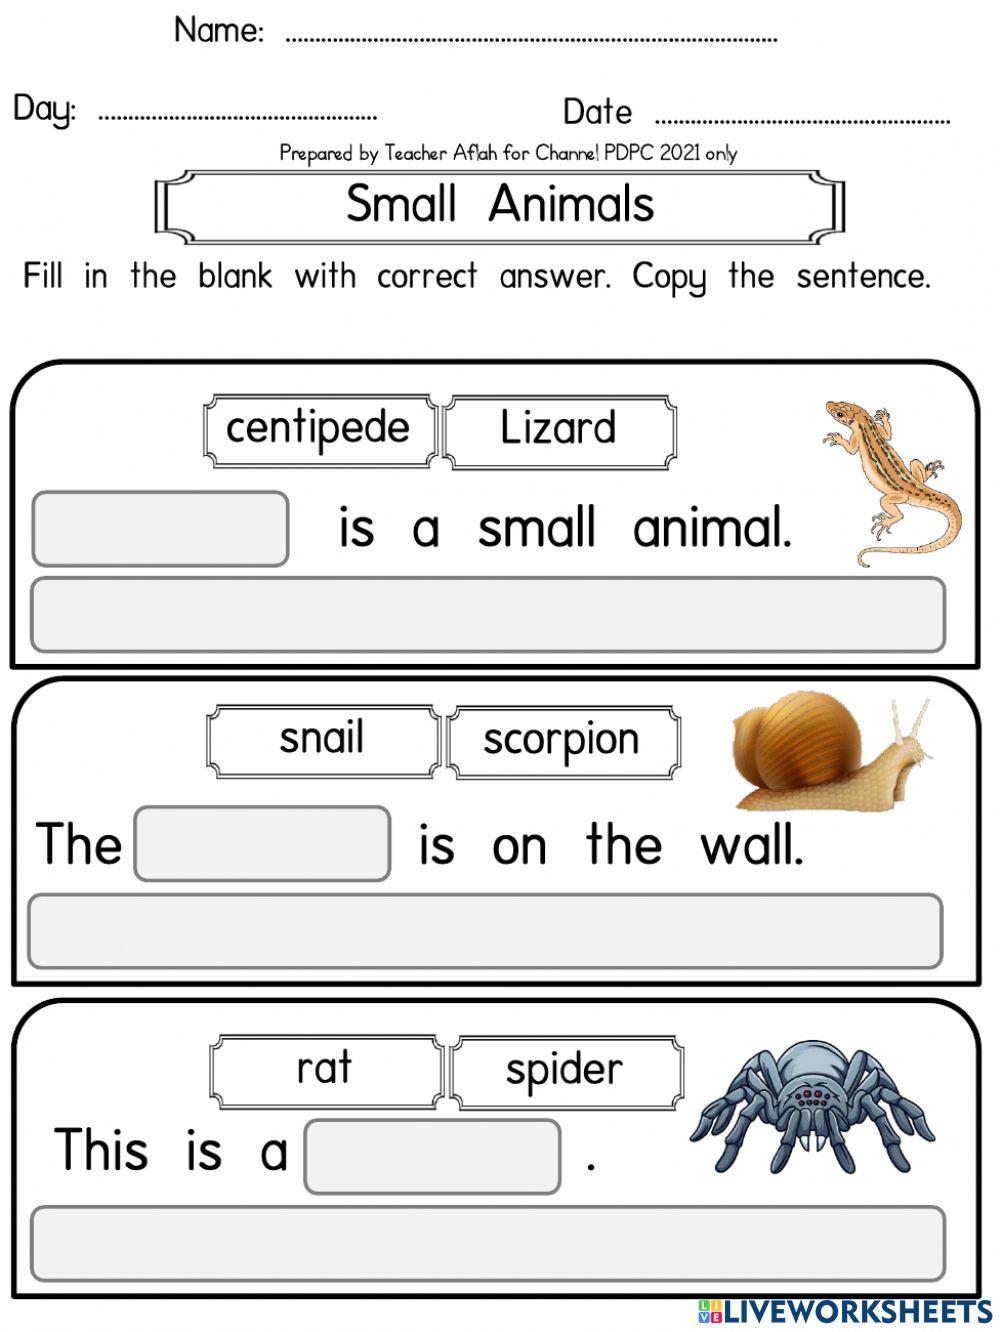 Small animals